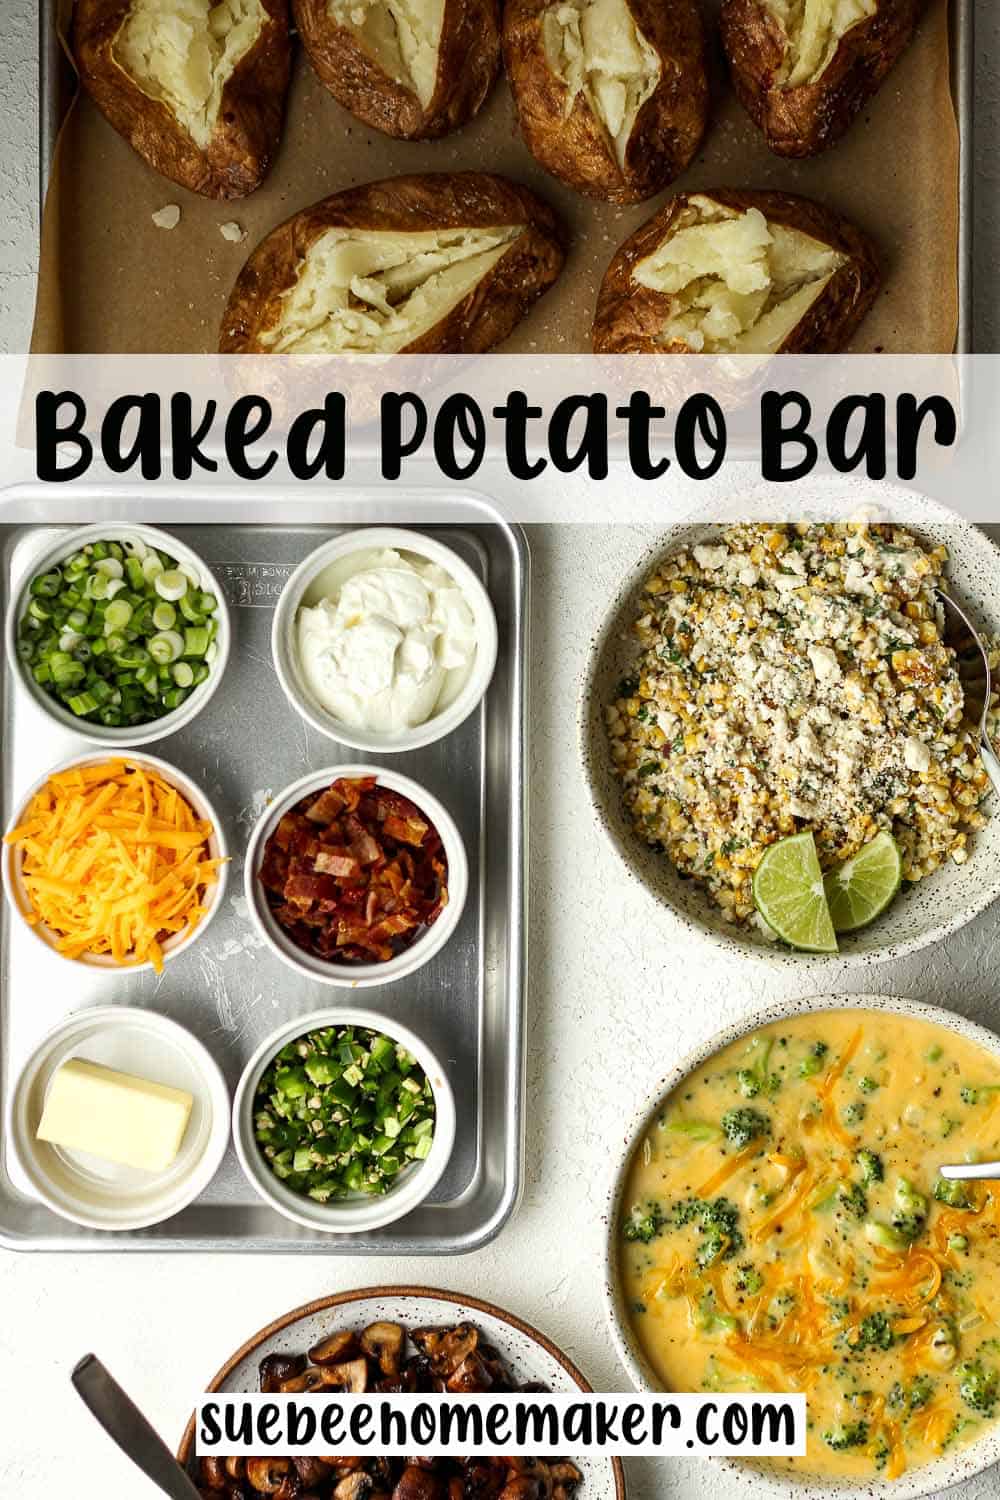 How to Make The Best Baked Potato Bar - SueBee Homemaker